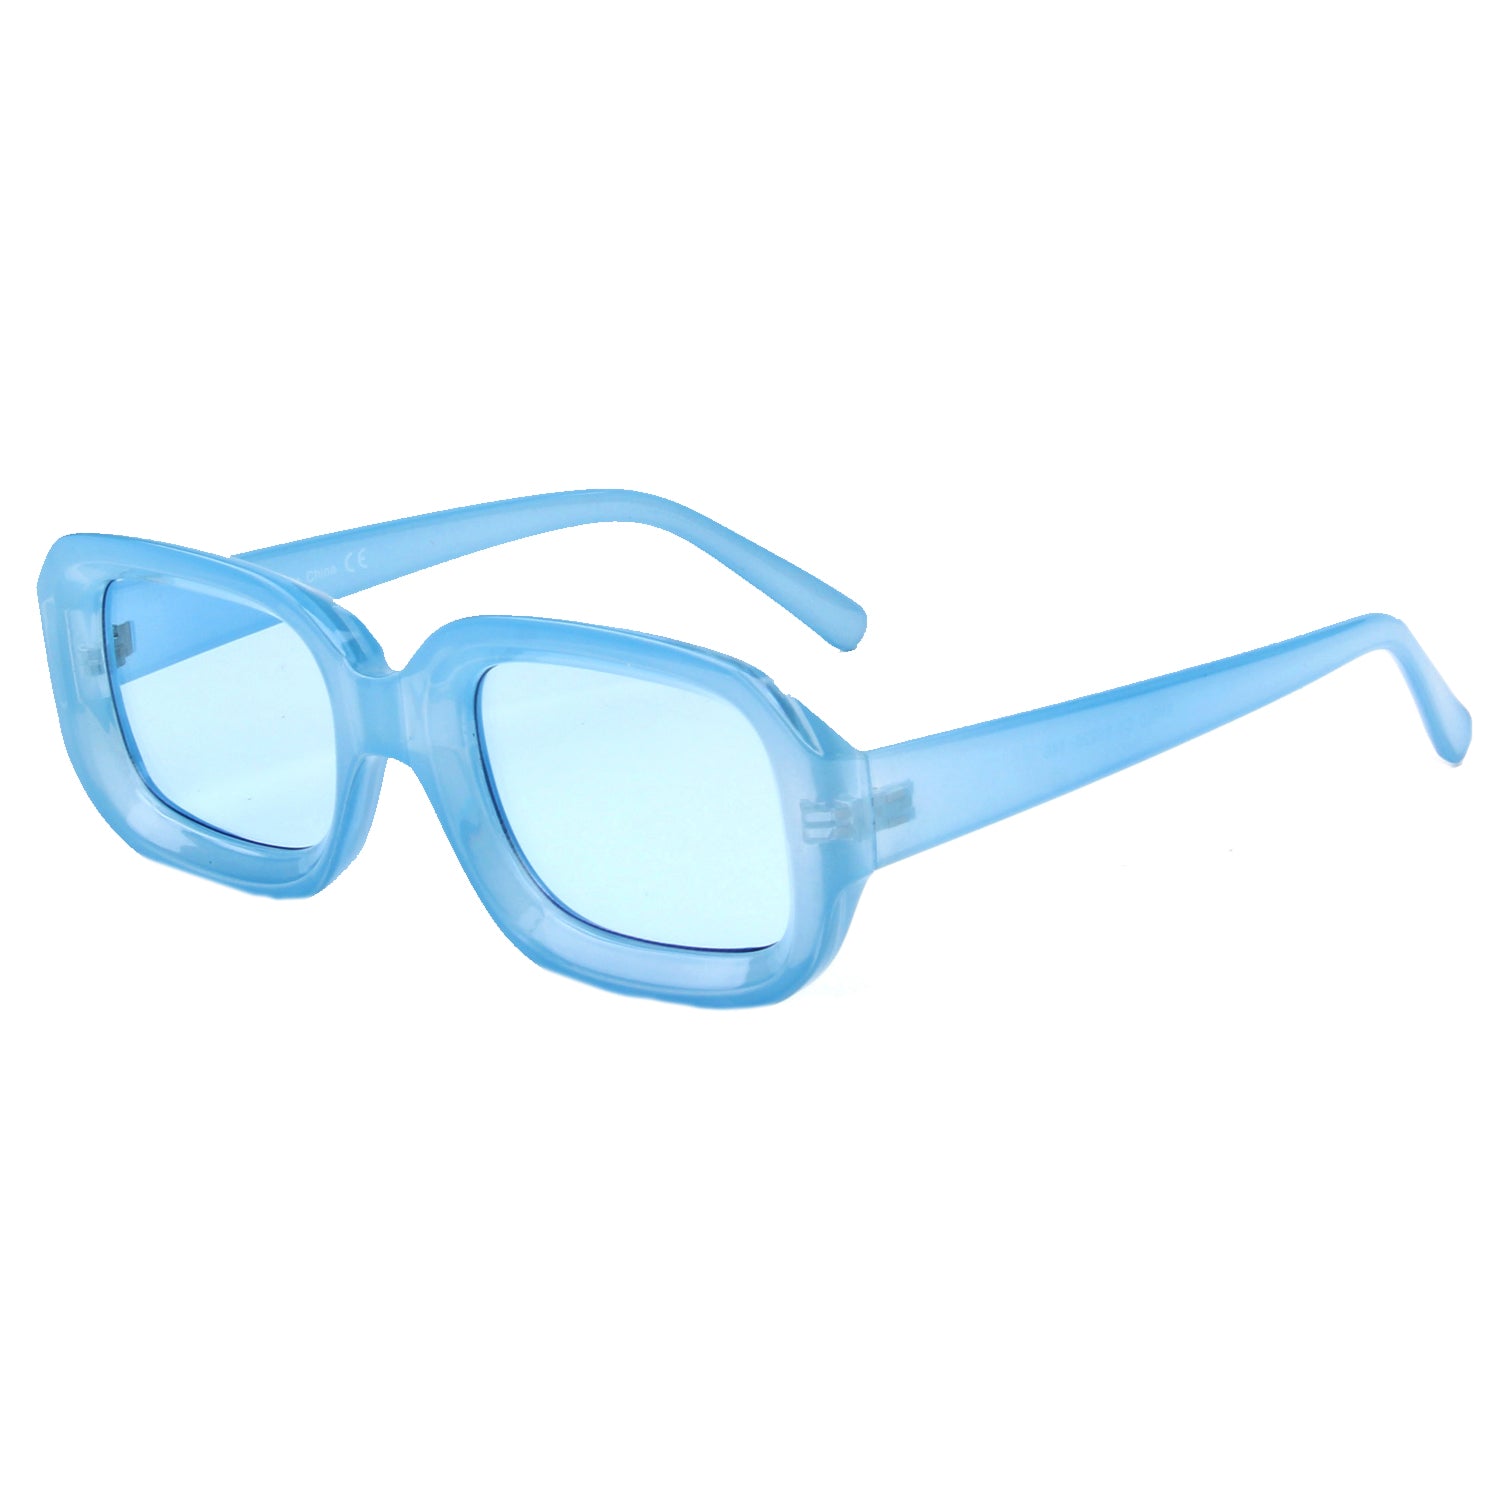 S1050 - Women Retro VINTAGE Square Sunglasses Blue